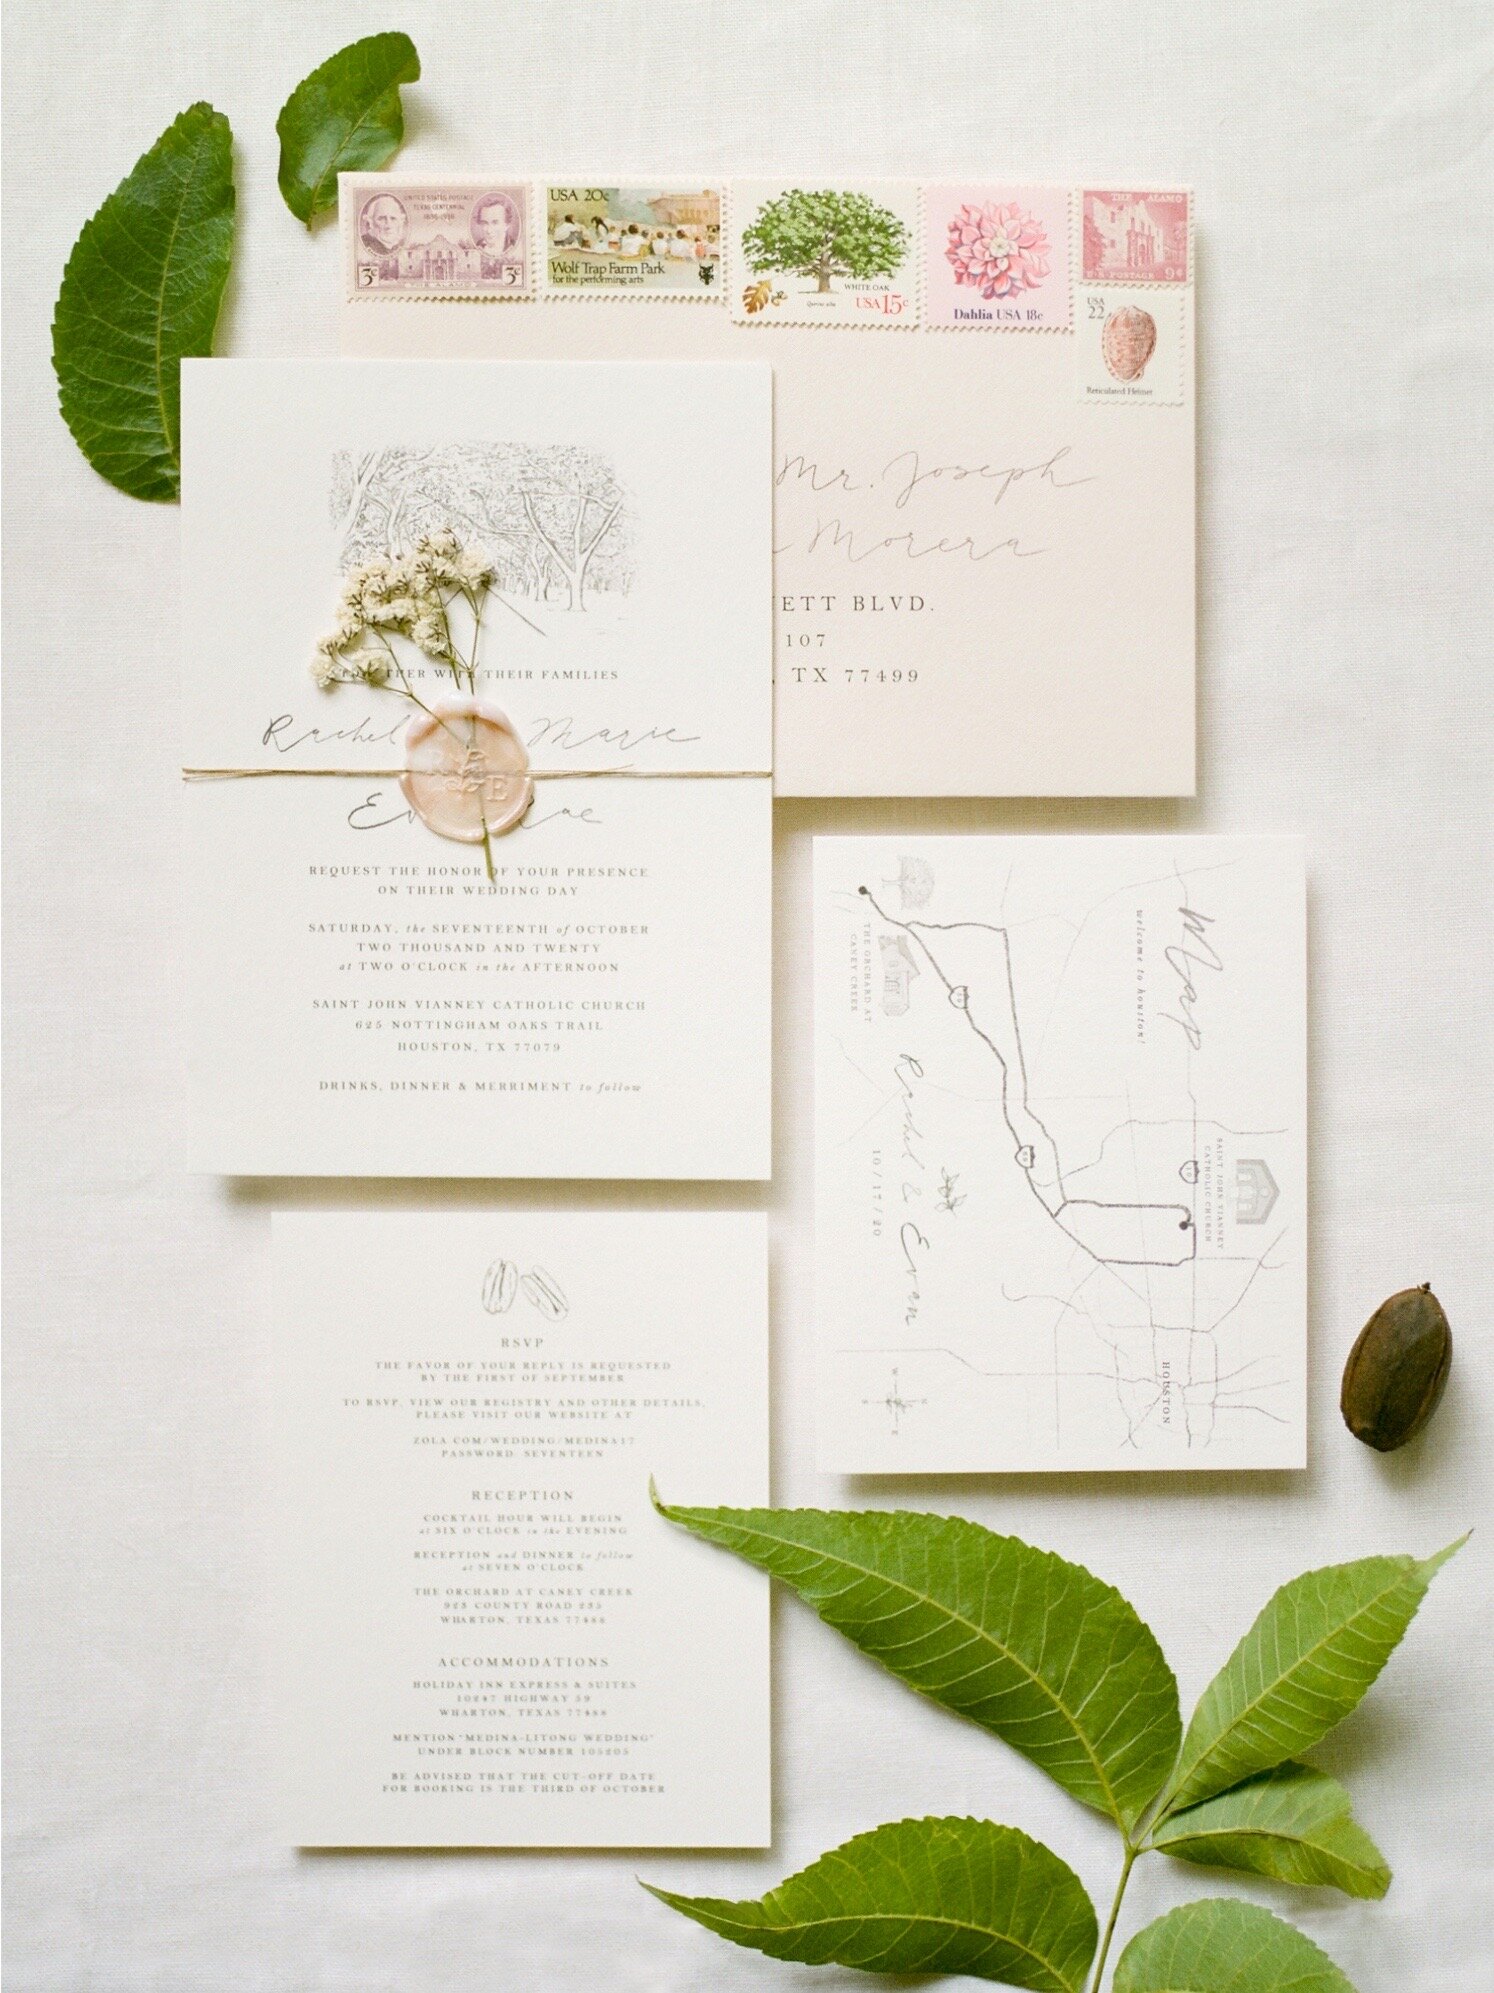 Adoration-custom-wax-seal-map--wedding-invitations-invite-stationery-venue-illustration-engaged-save-the-dates-best.JPG